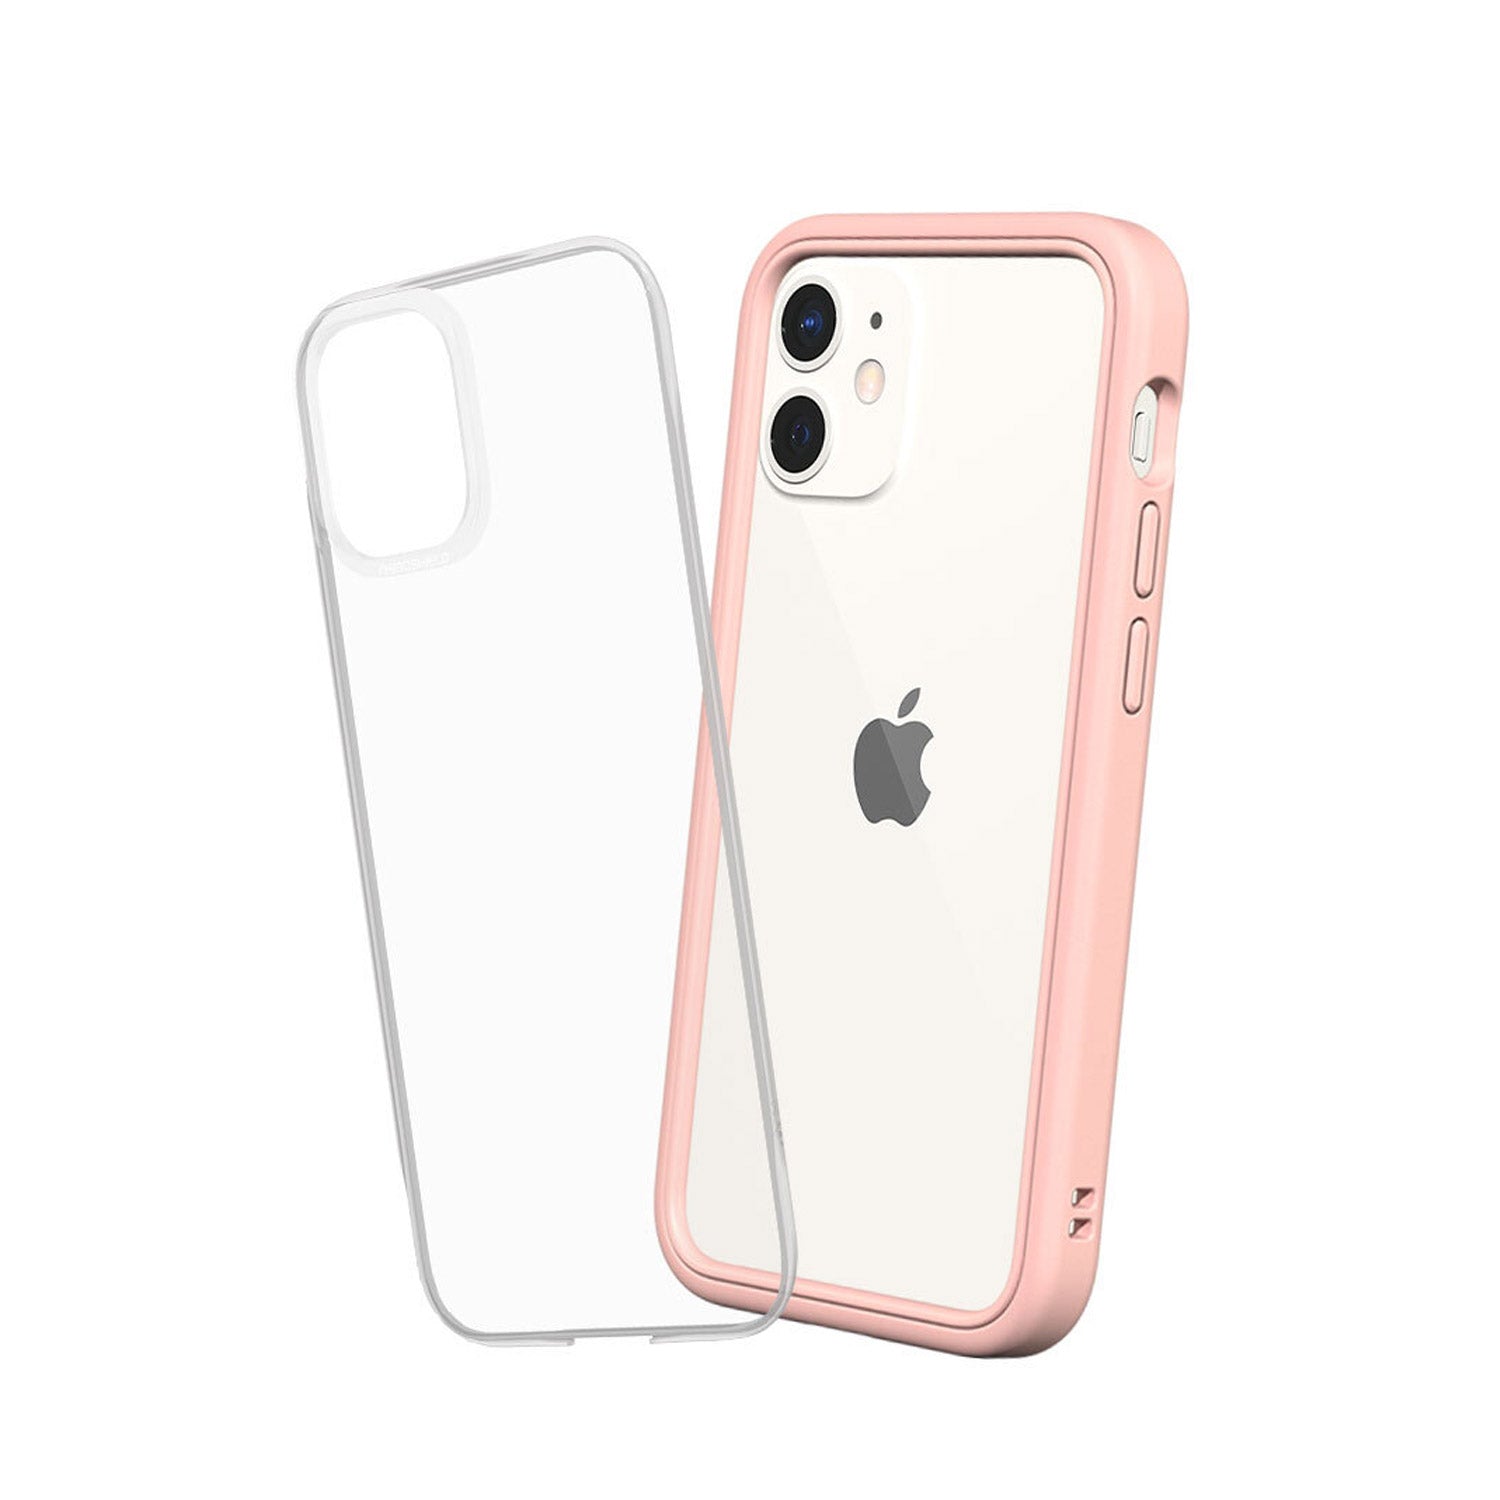 RhinoShield iPhone 12 mini Case MOD NX with Rim, Button, Frame, Clear Back Plate Blush Pink